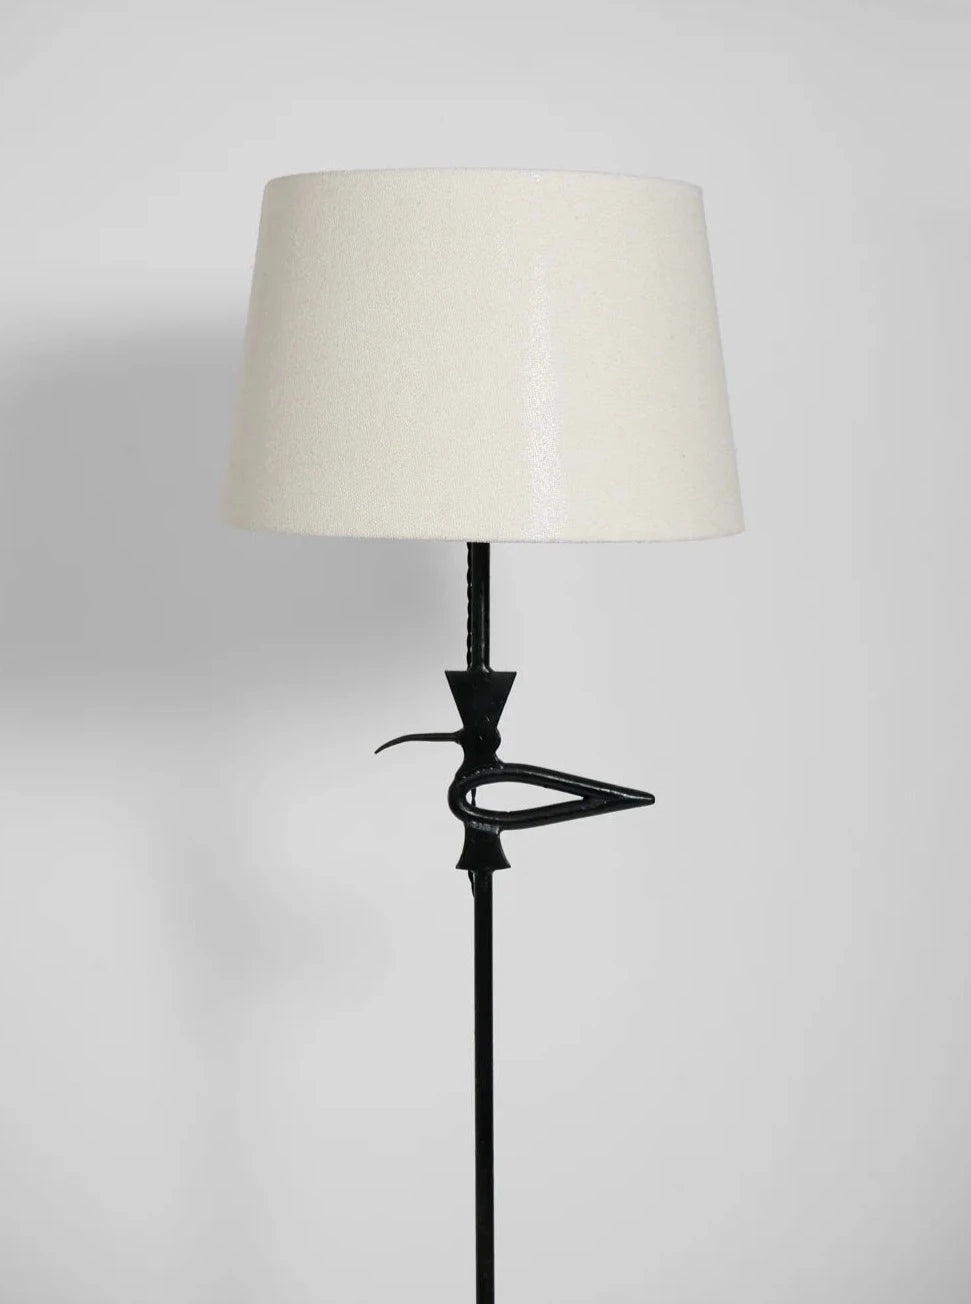 Modern Brejos Floor Lamp with adjustable stand and sleek design